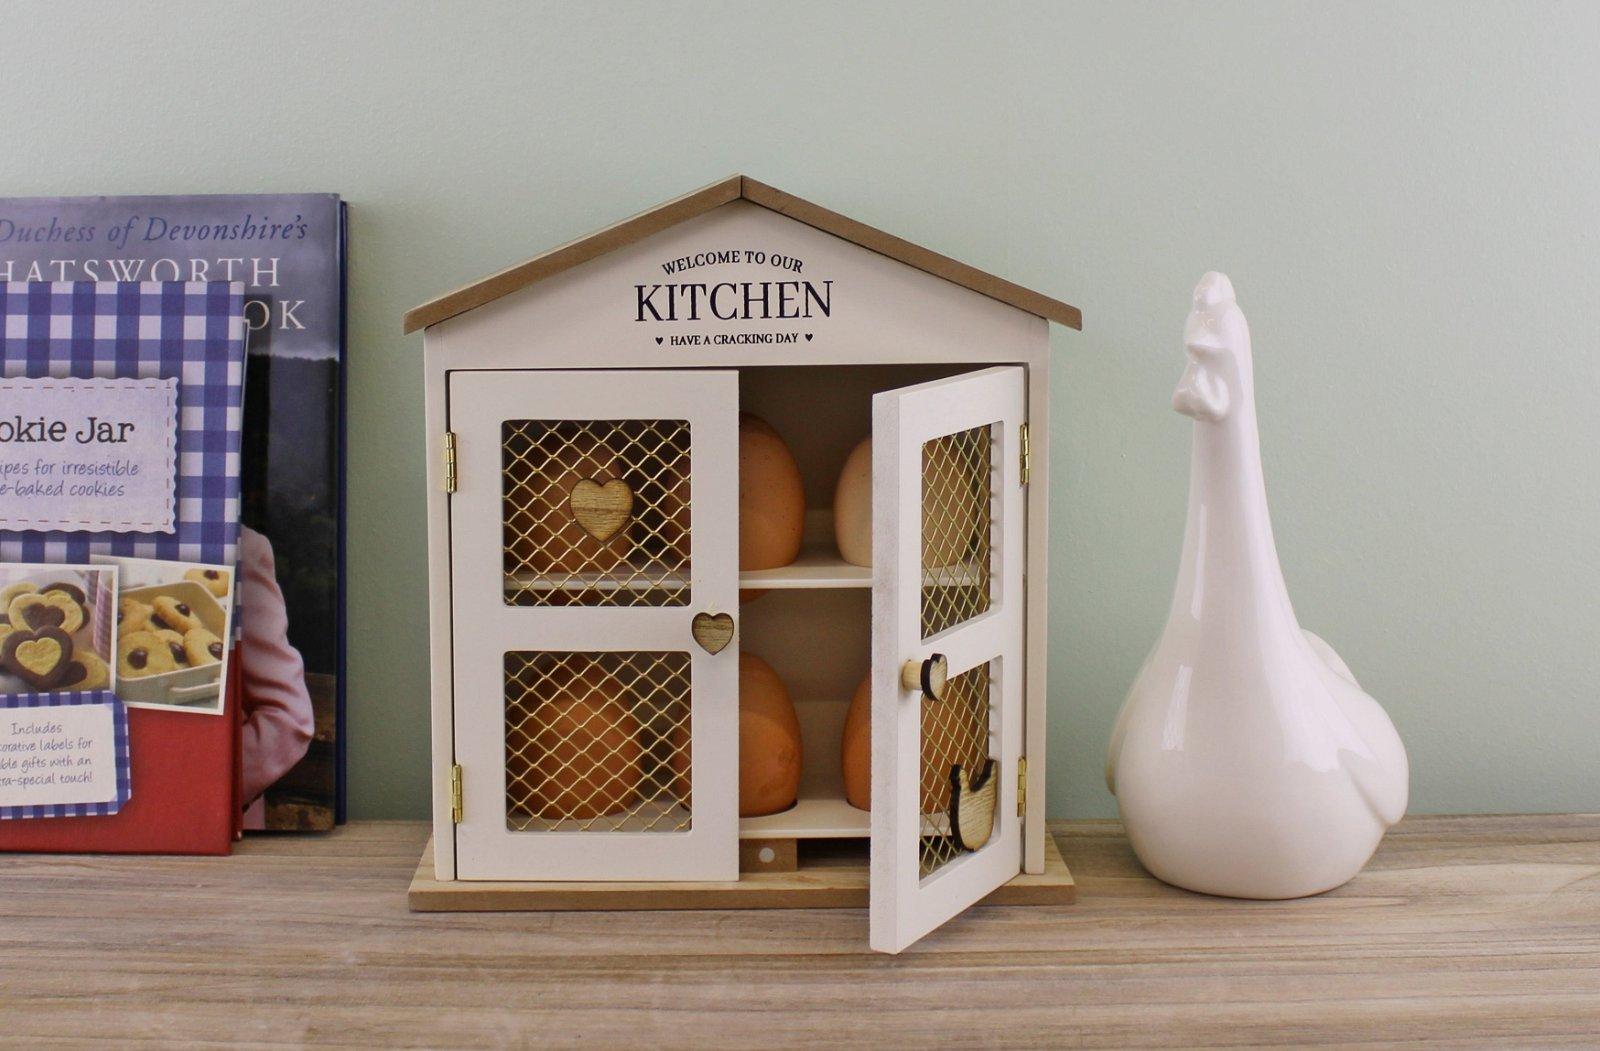 Welcome To Our Kitchen Egg House, Storage-Kitchen Storage